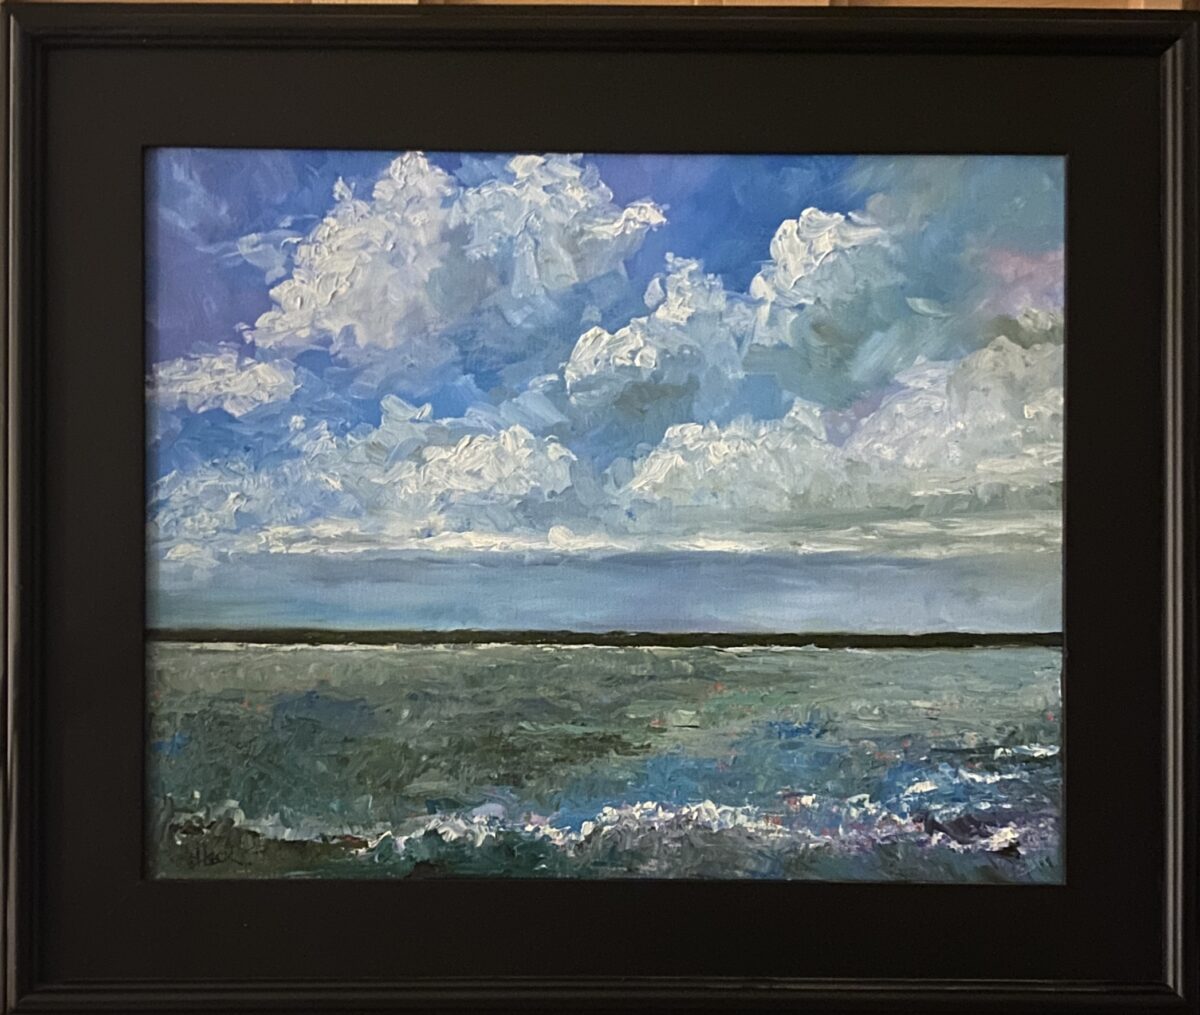 236 - Stormy Seas - 16x20 - Landscape - $425